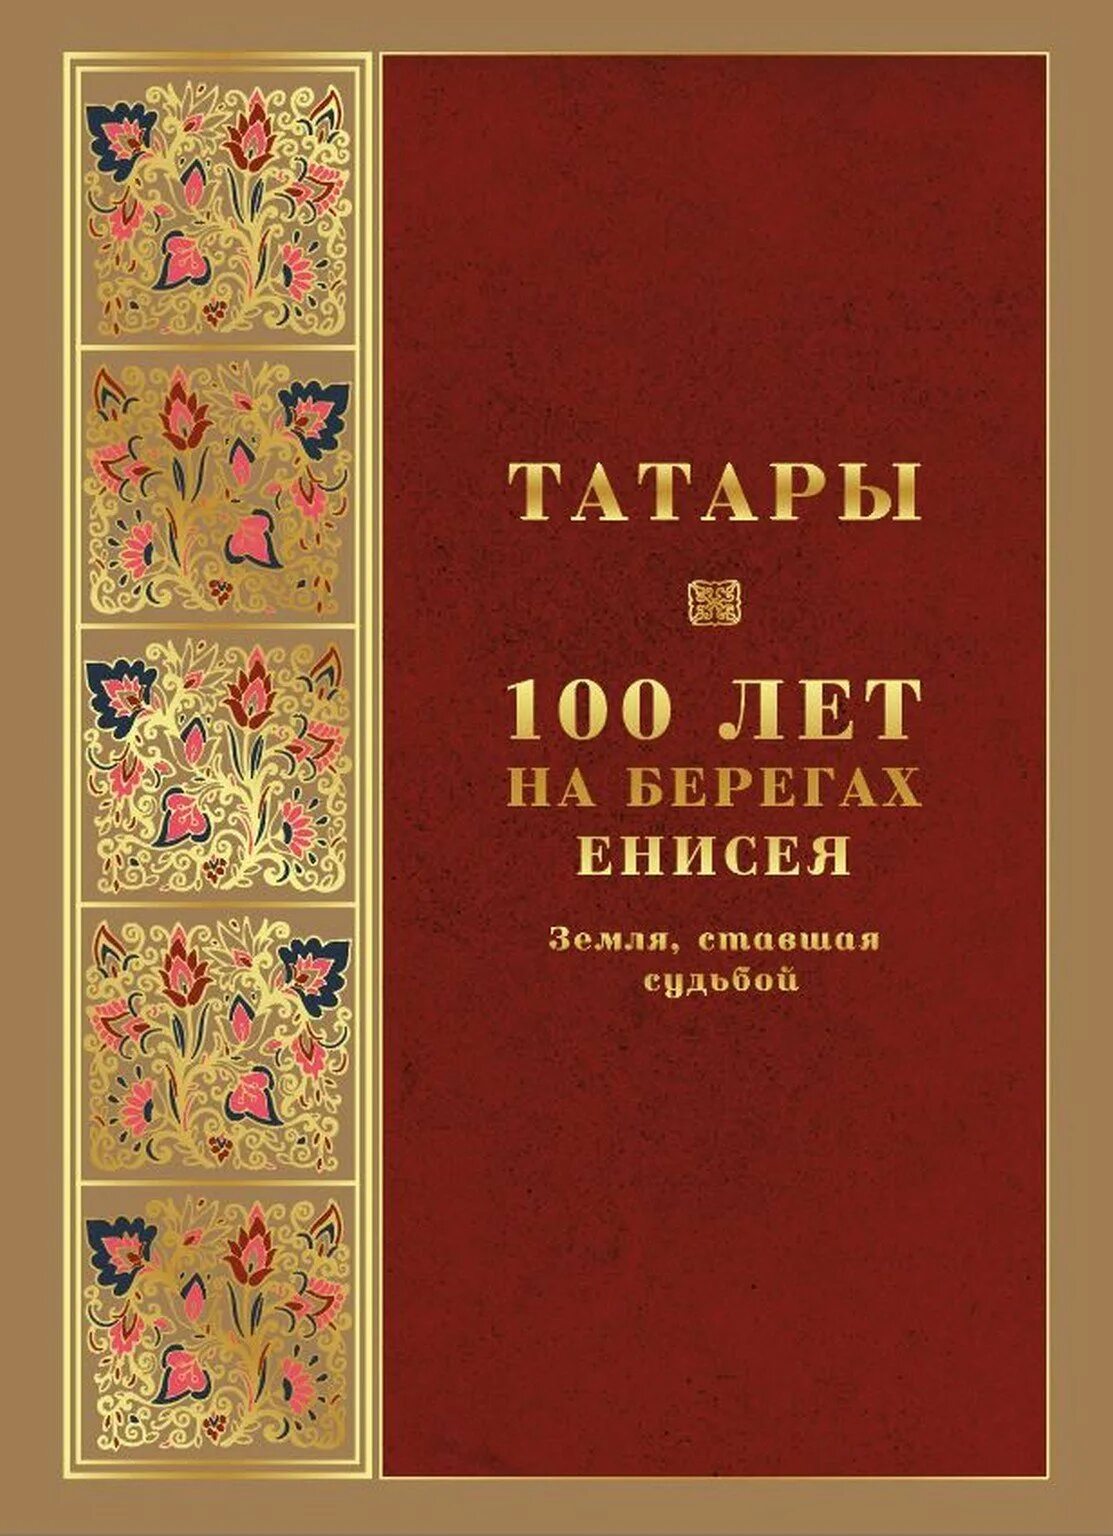 Книга татары. Татары 100 лет на берегах Енисея. Татарка книга.. 100 Книг в год.